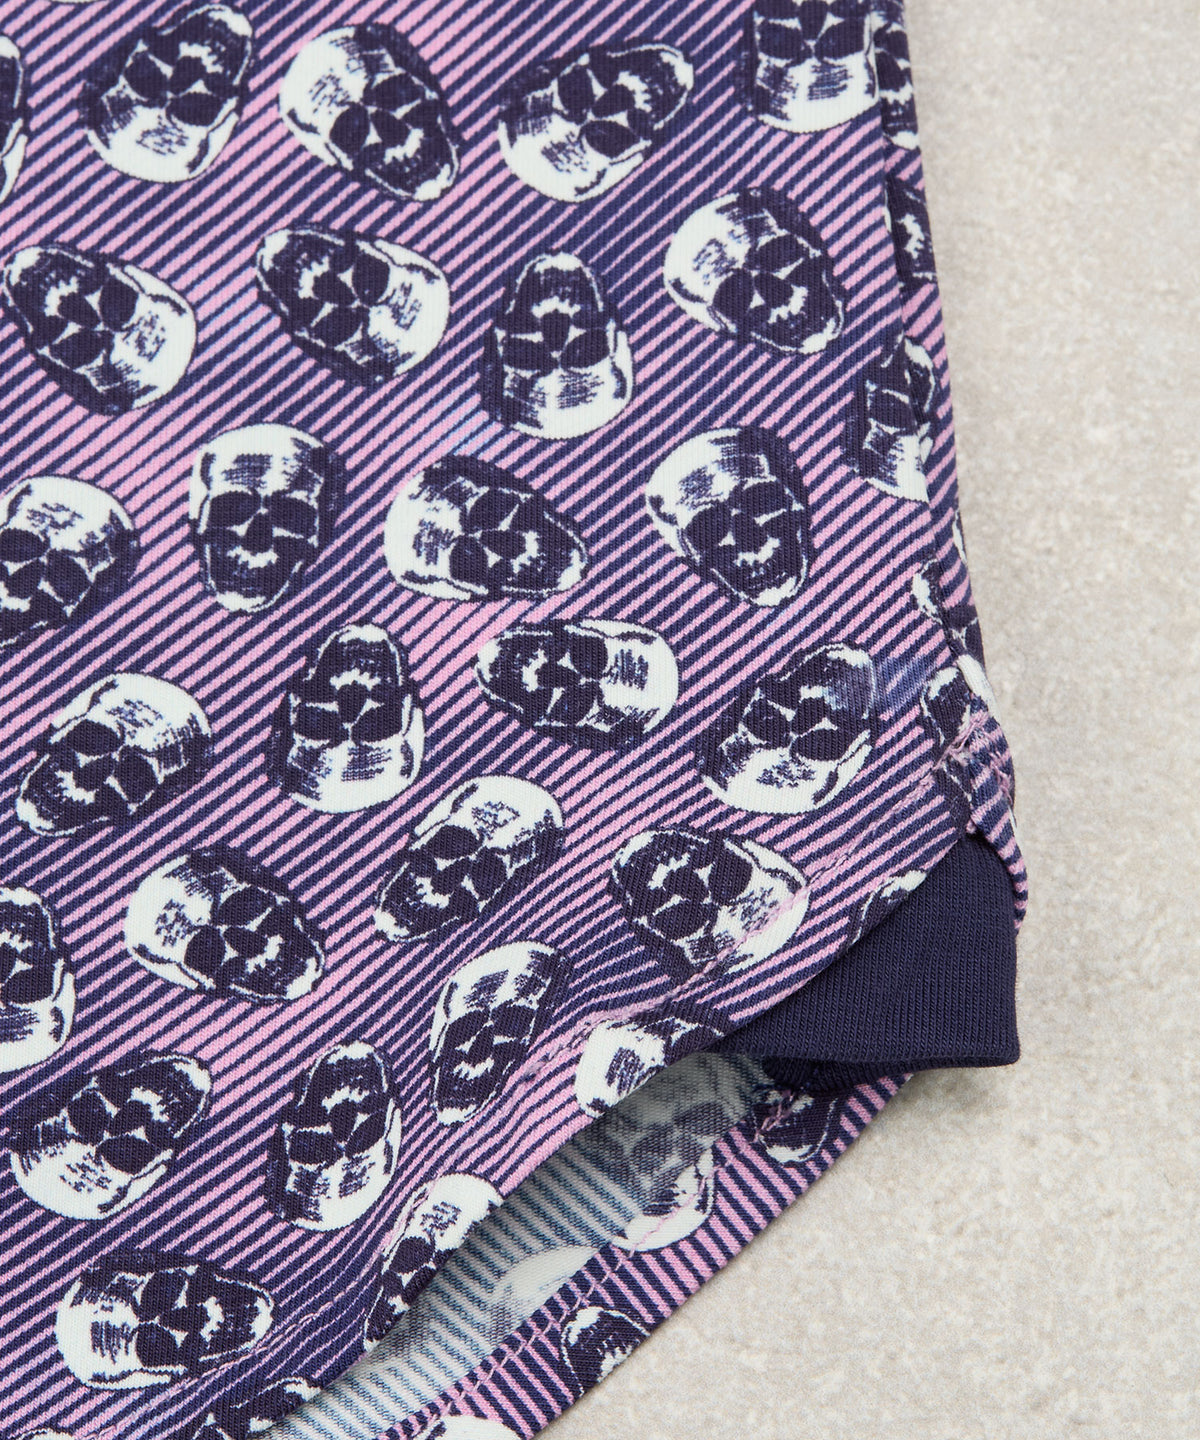 Westport Black Button Front Skull Print Knit Shirt, Men's Big & Tall